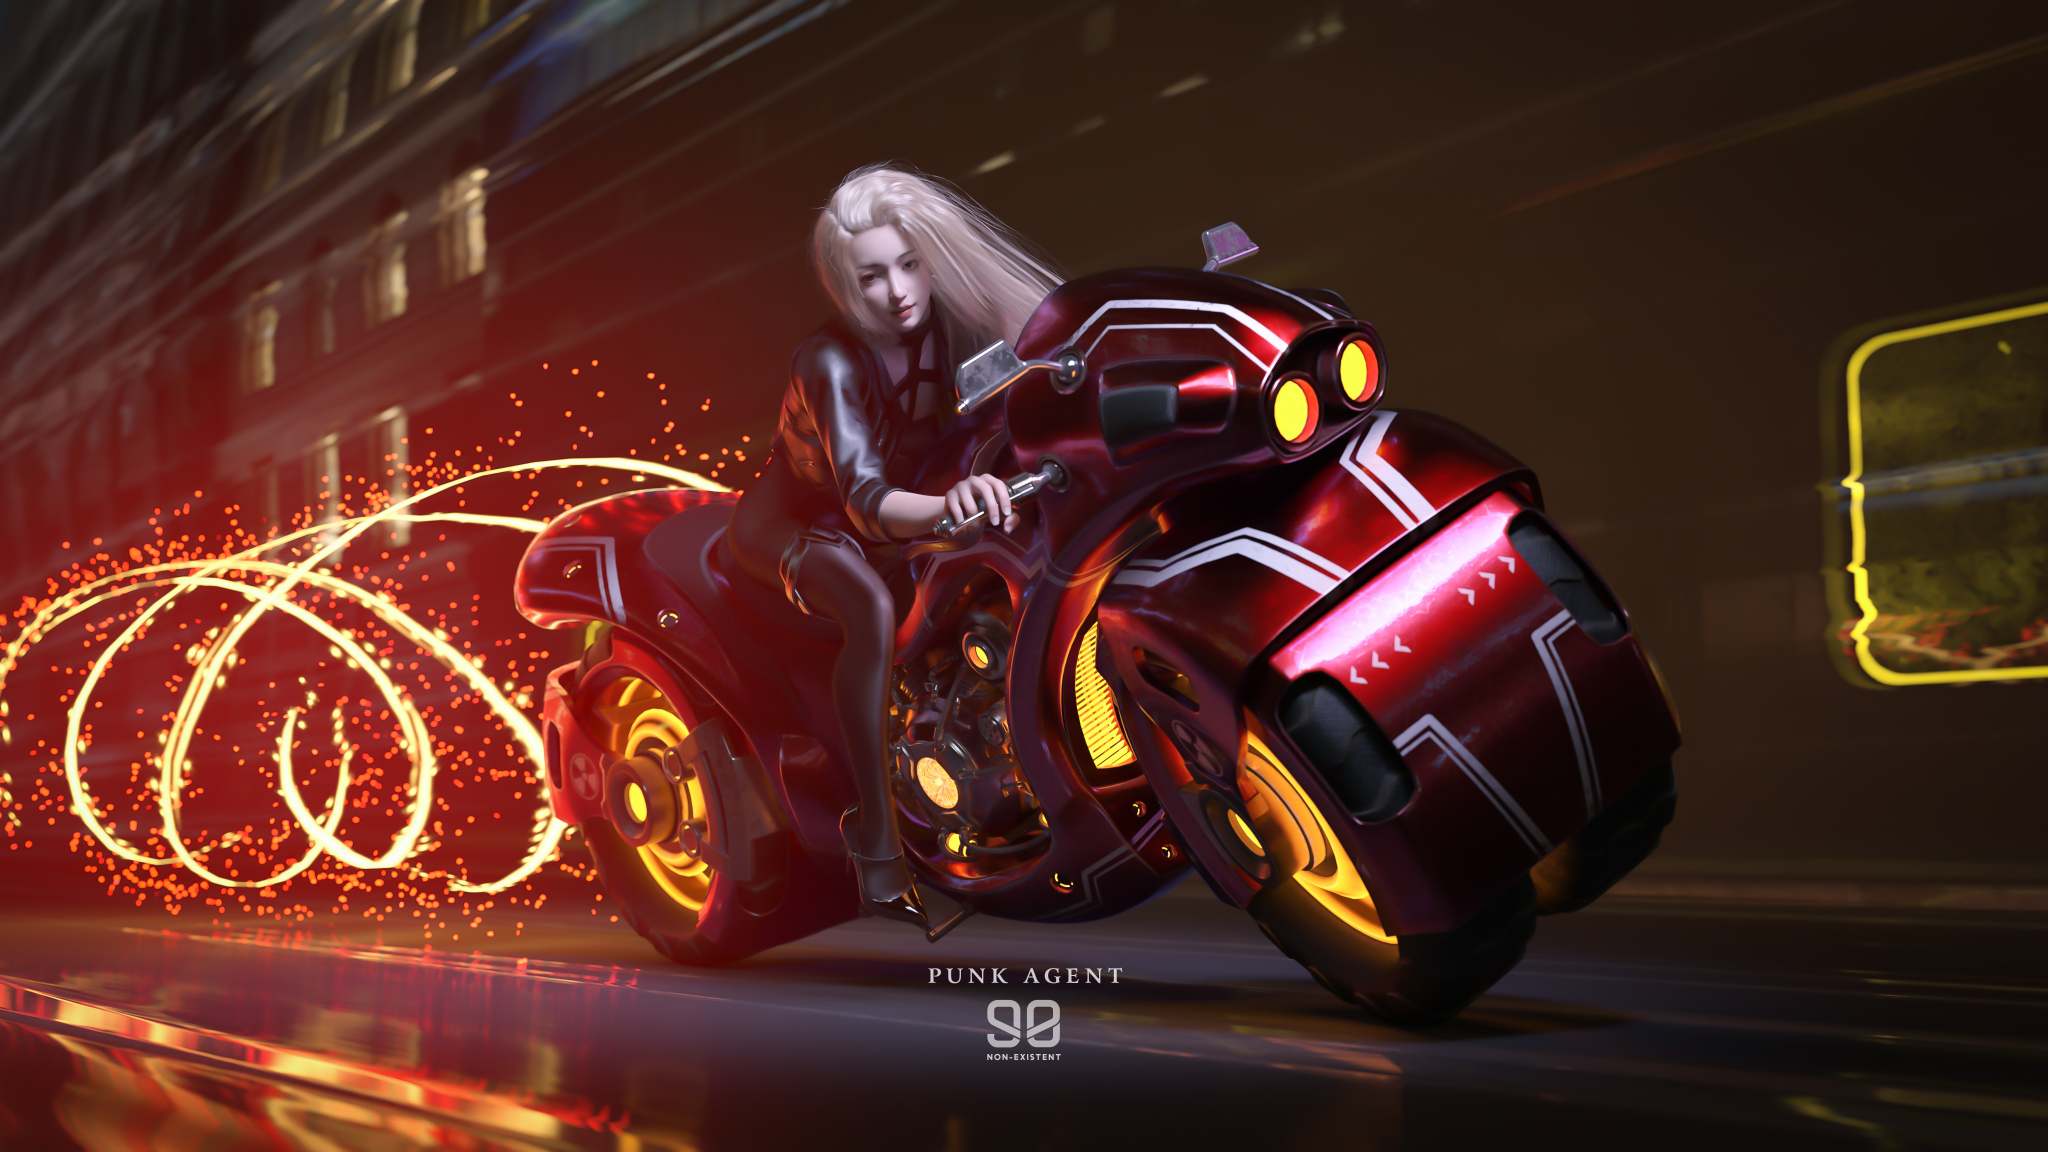 CG Artwork Fantasy Girl Fantasy Art Motorcycle Futuristic CGi 2048x1152